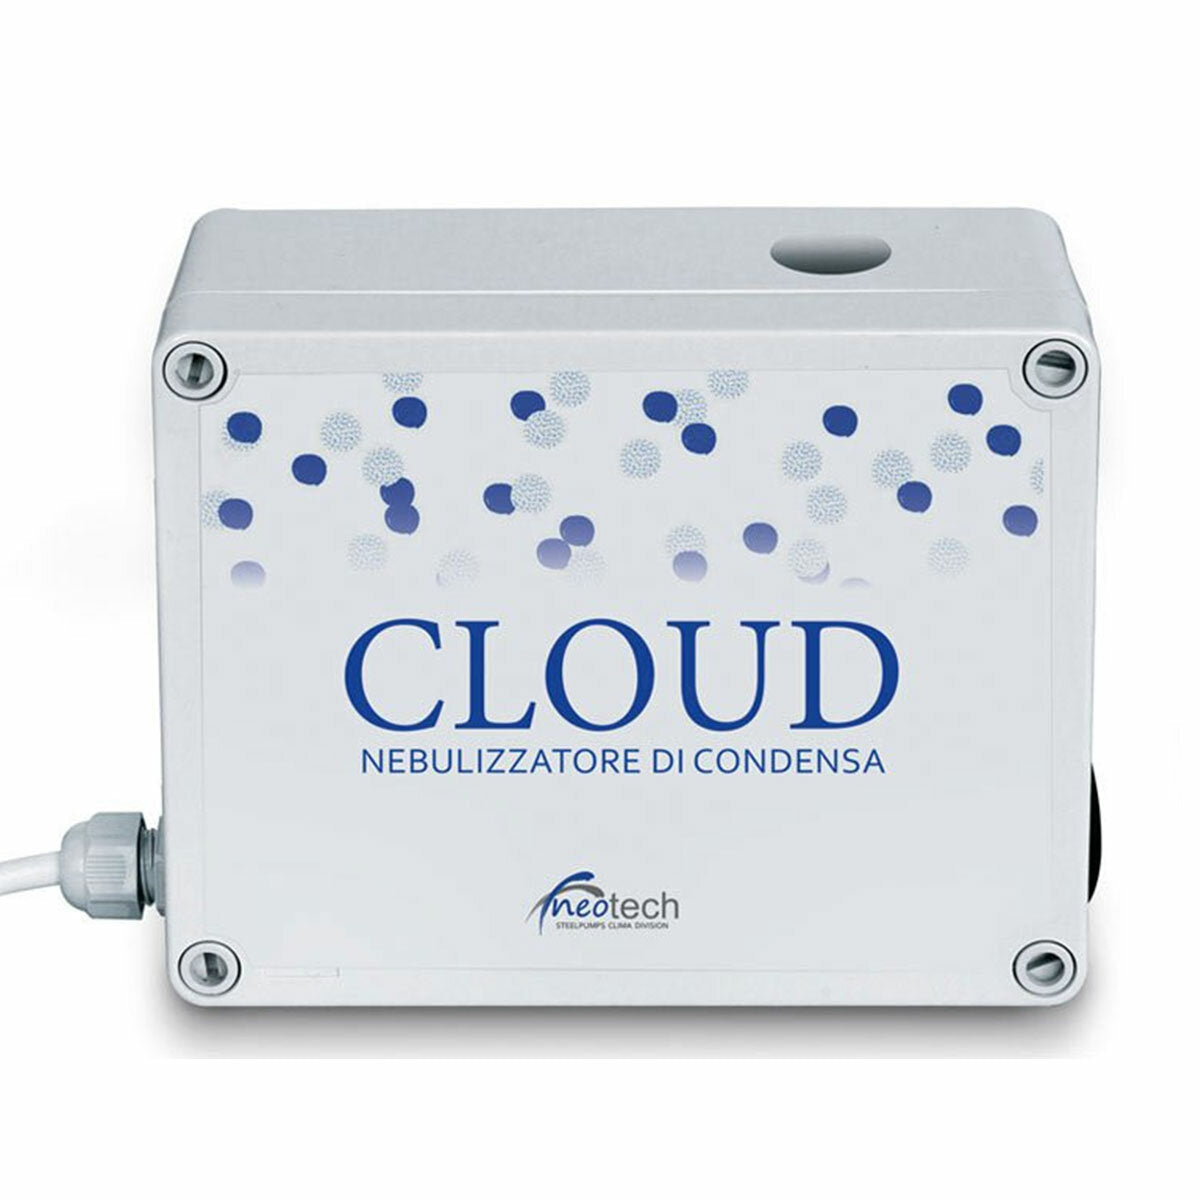 Steelpumps Neotech Cloud condensate nebulizer